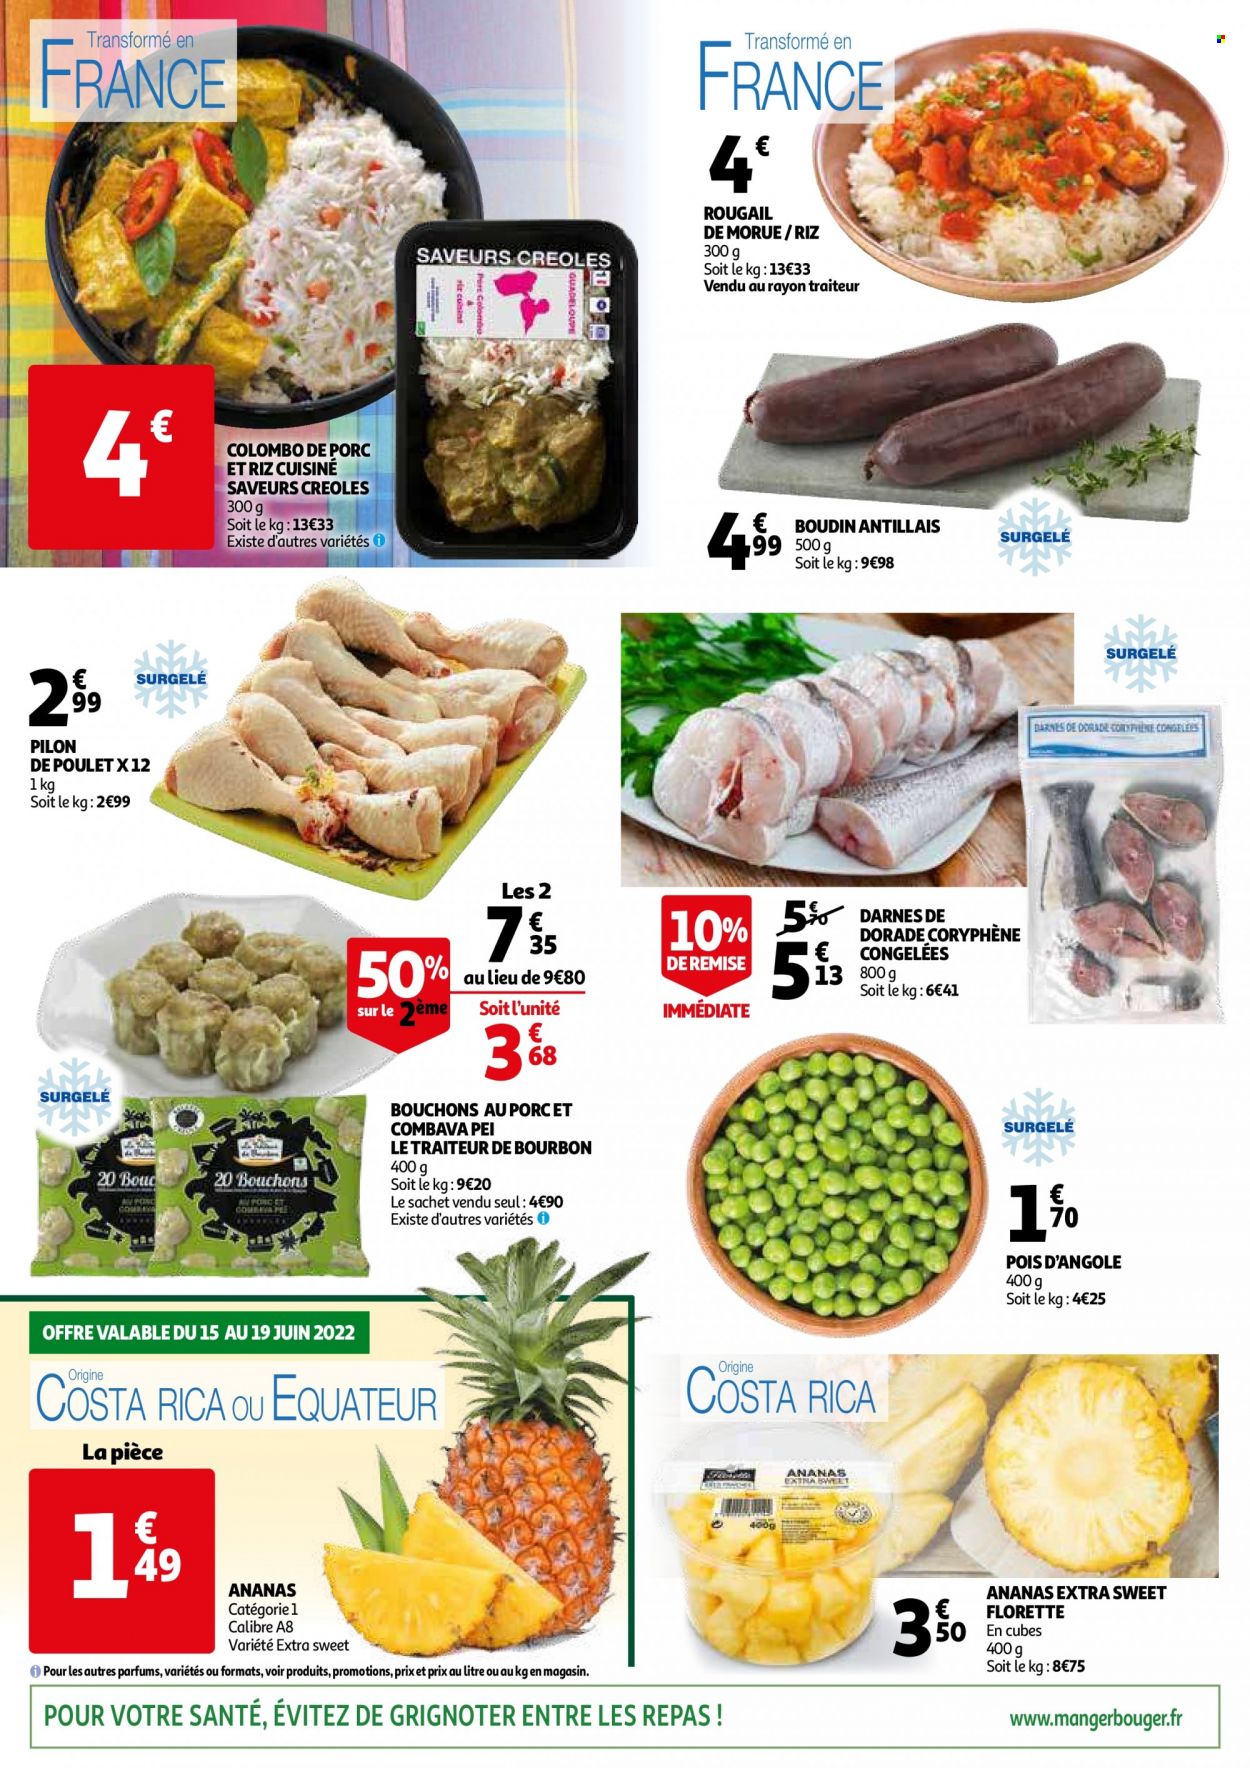 Catalogue Auchan - 13.06.2022 - 26.06.2022. 